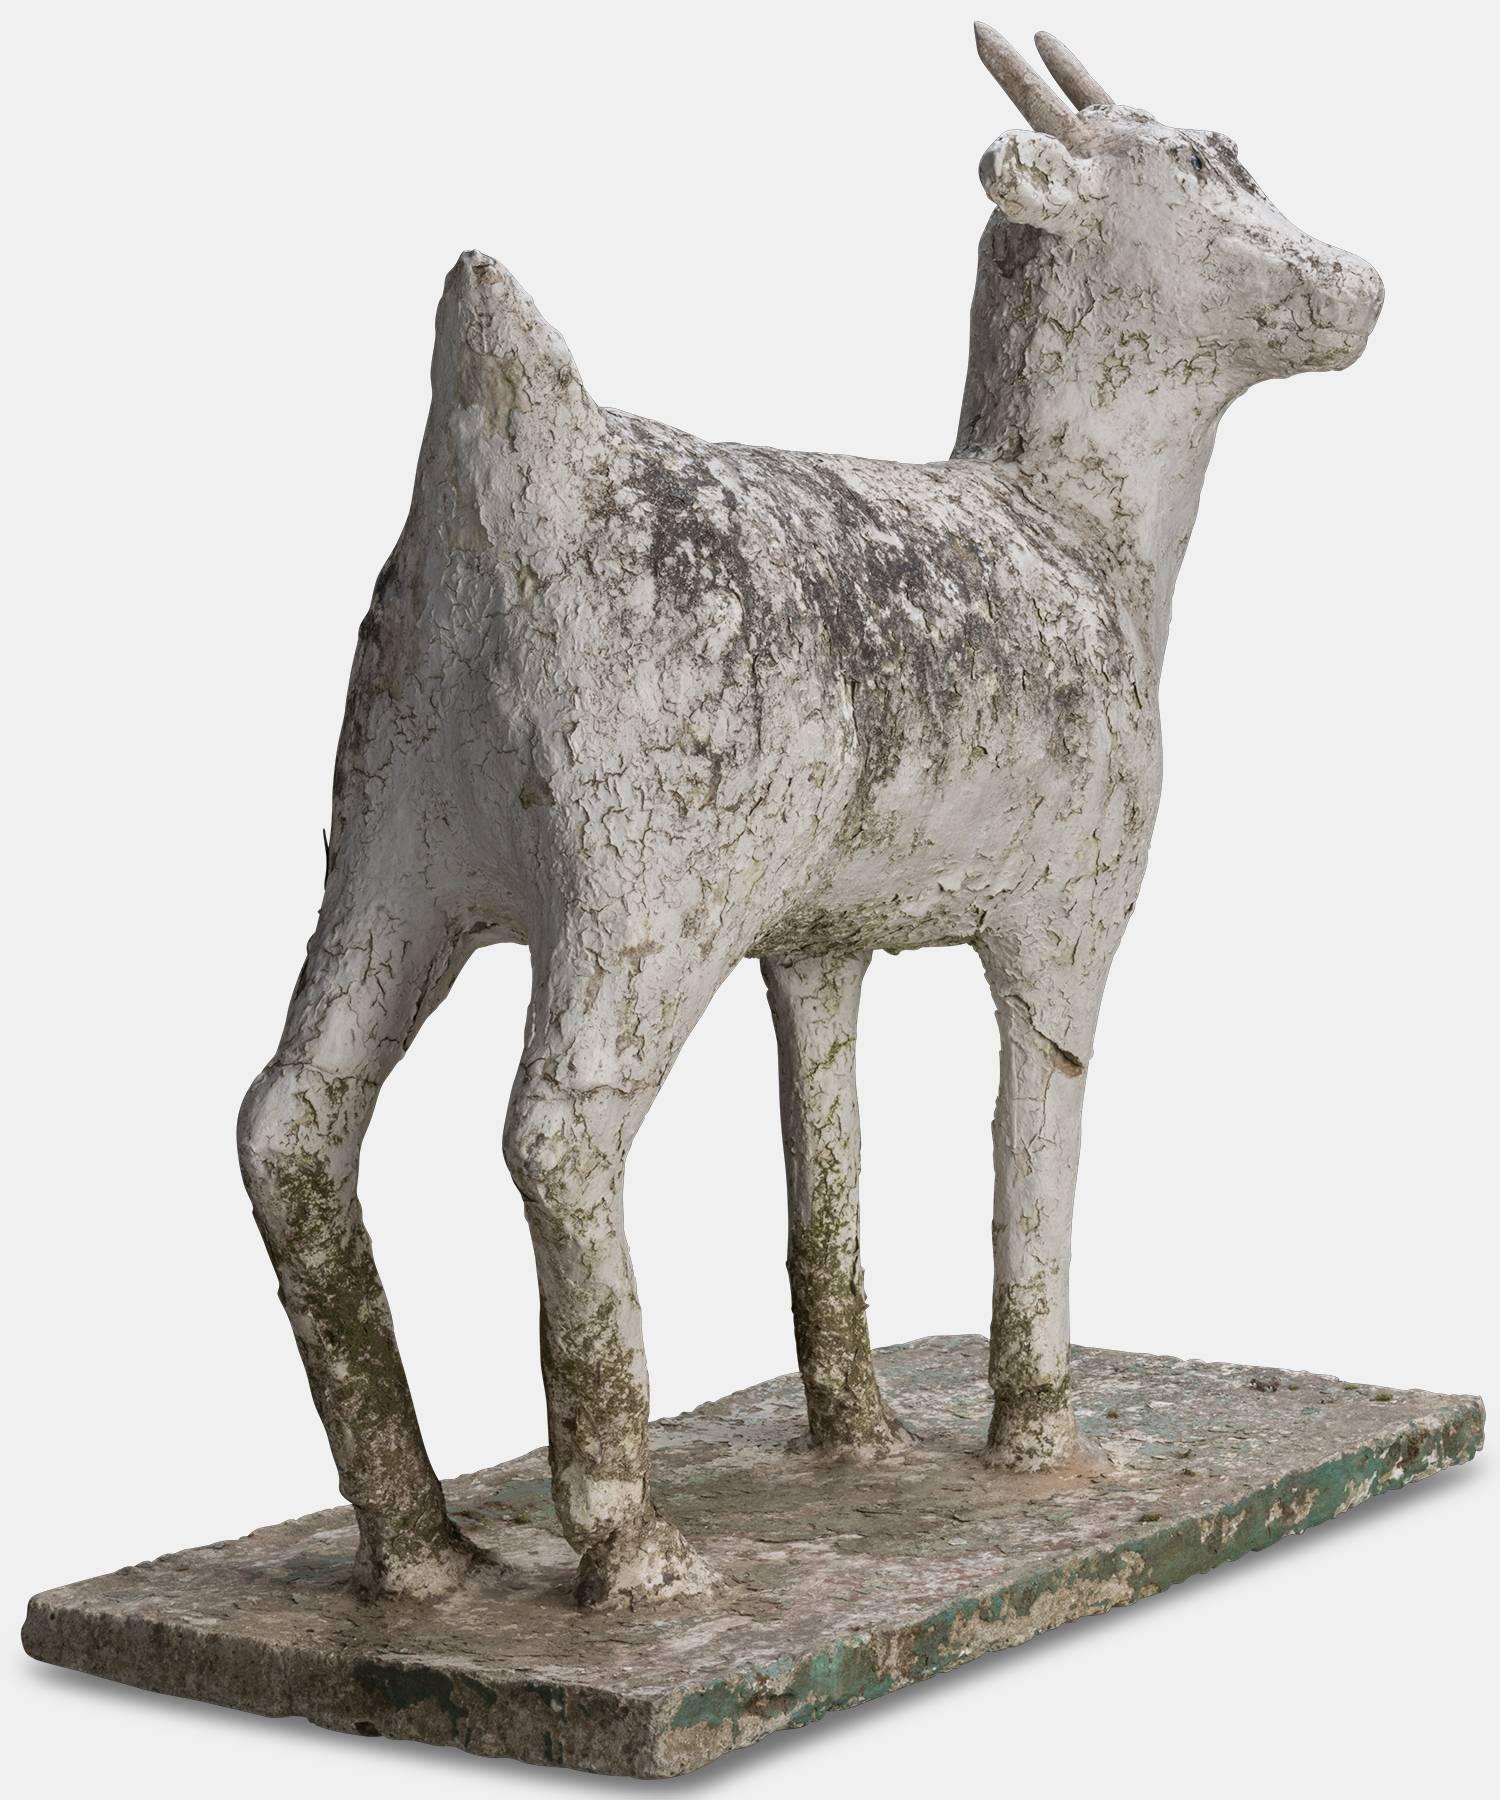 goat sculpture for sale